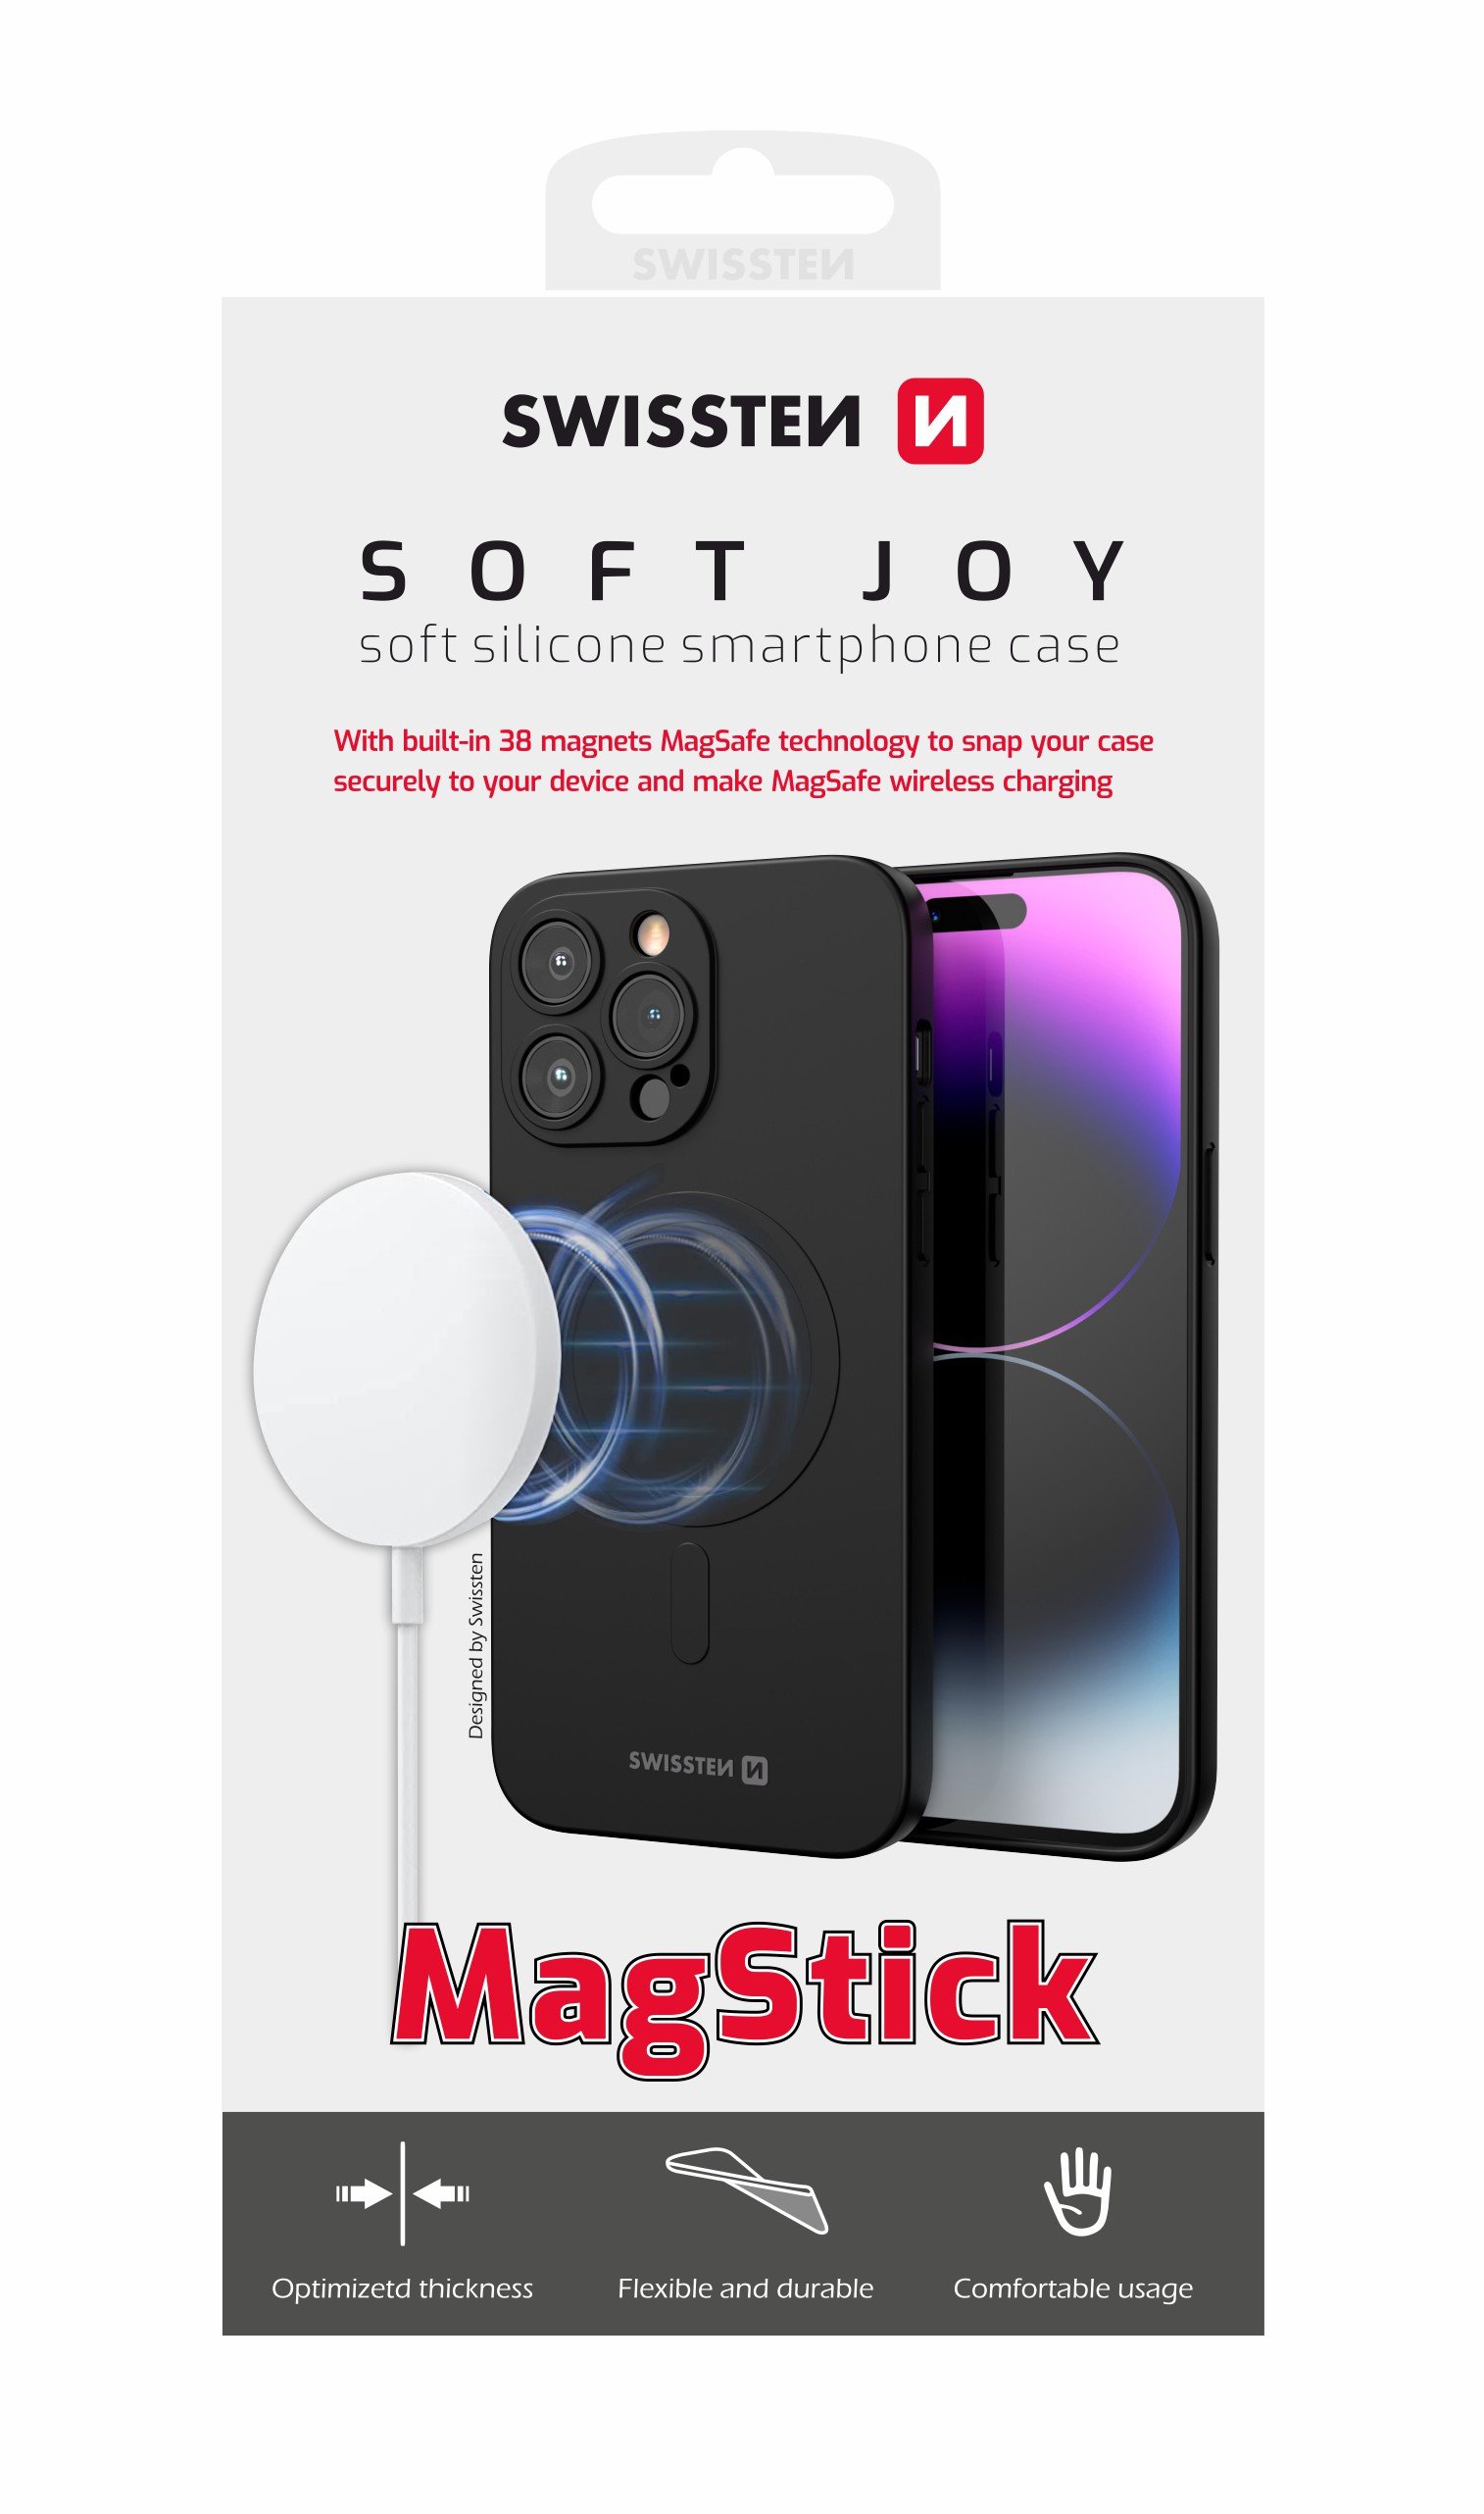 Swissten Soft Joy Magstick Case for Apple iPhone 11